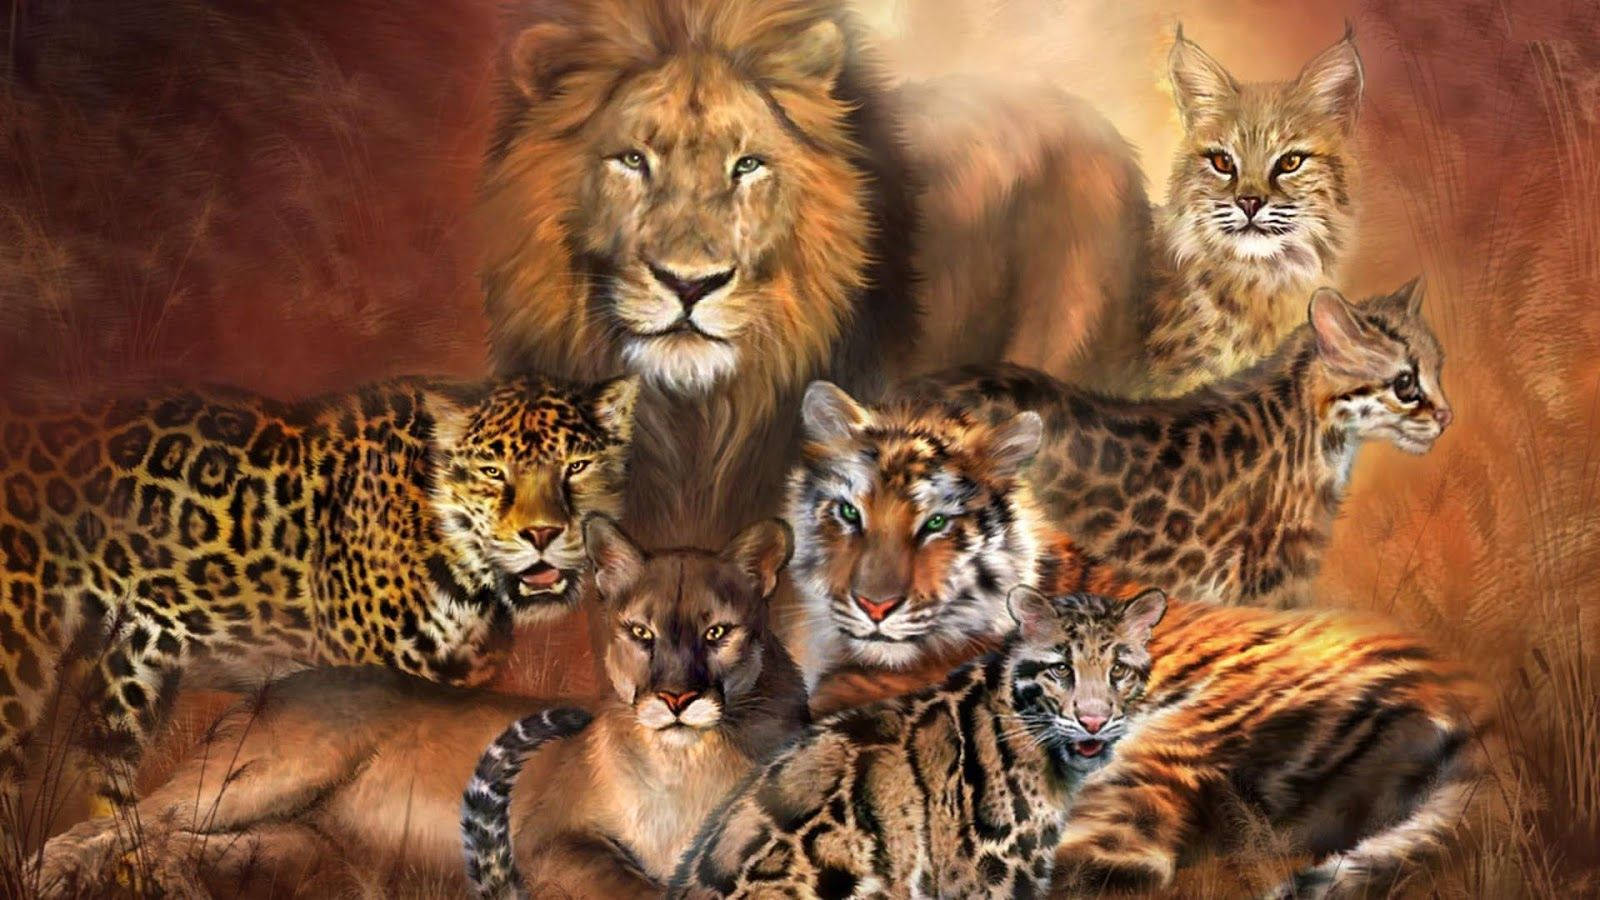 Lion And Tiger Variations Wallpaper